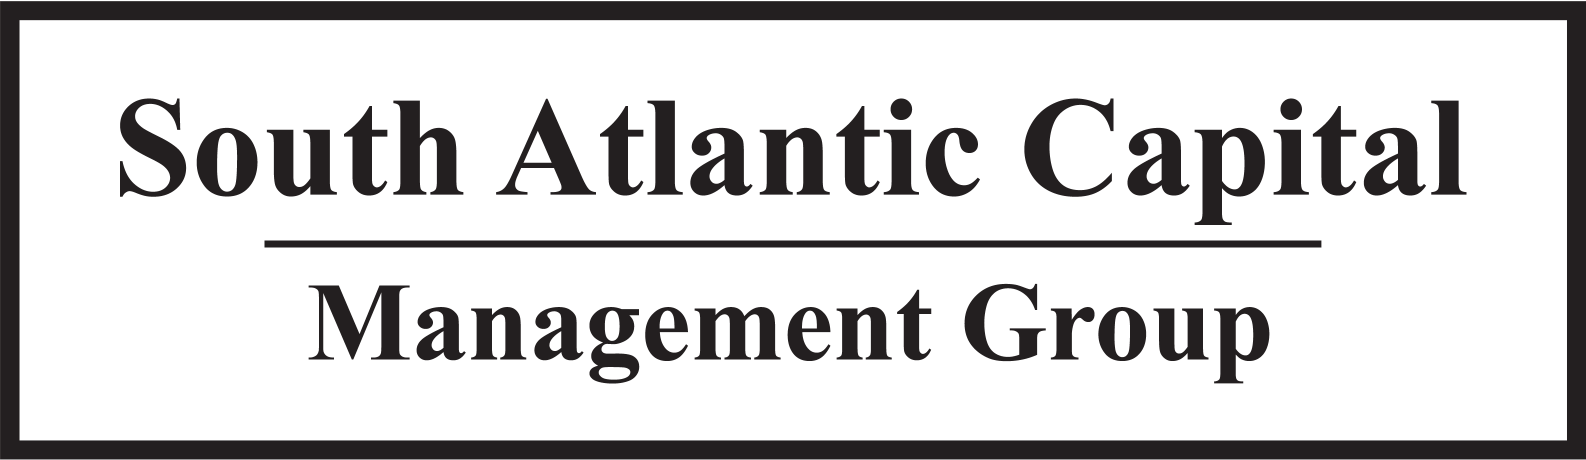 South Atlantic Capital logo black